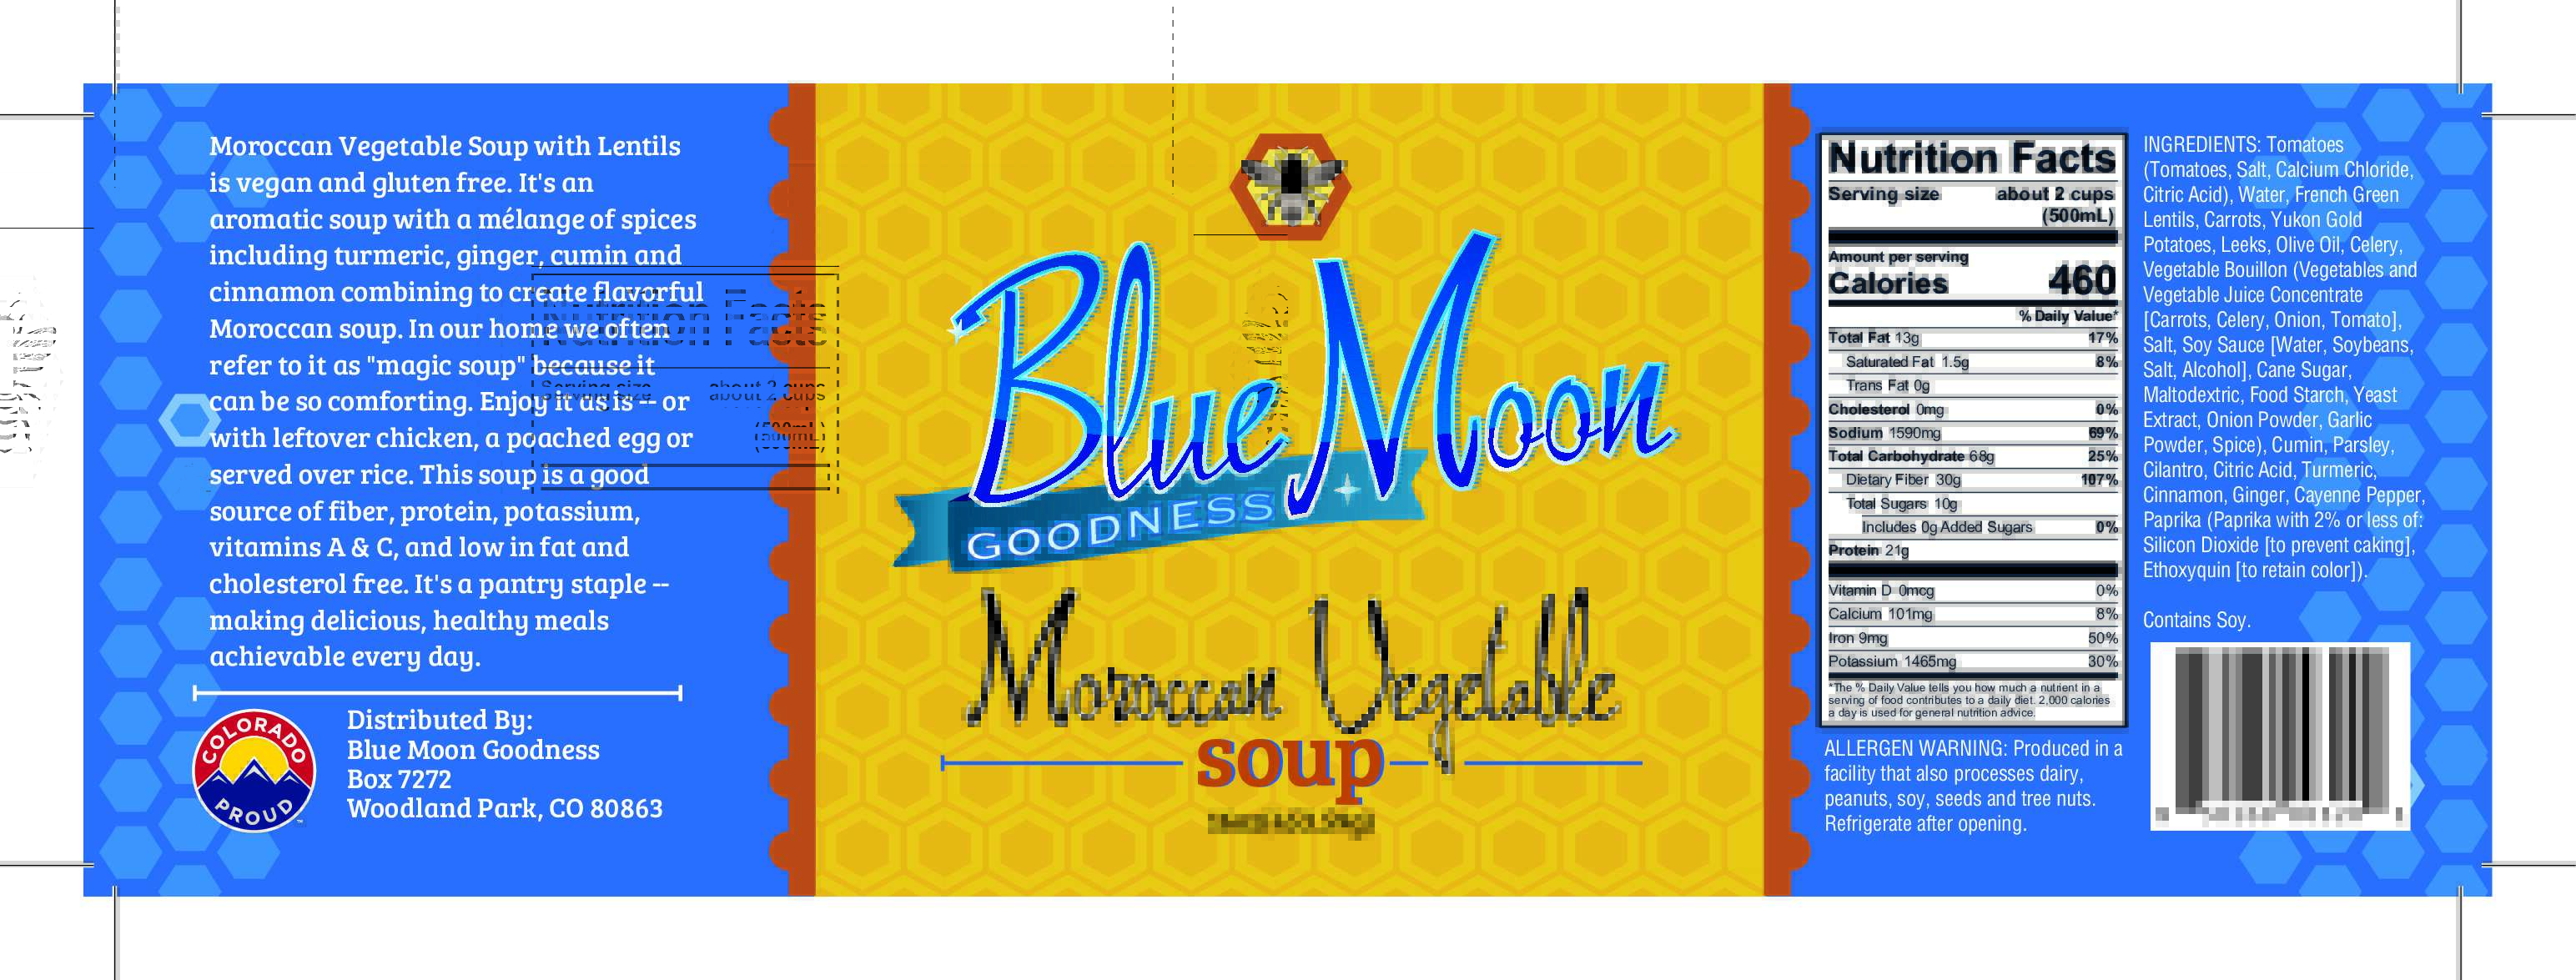 moroccan vegetable soup label